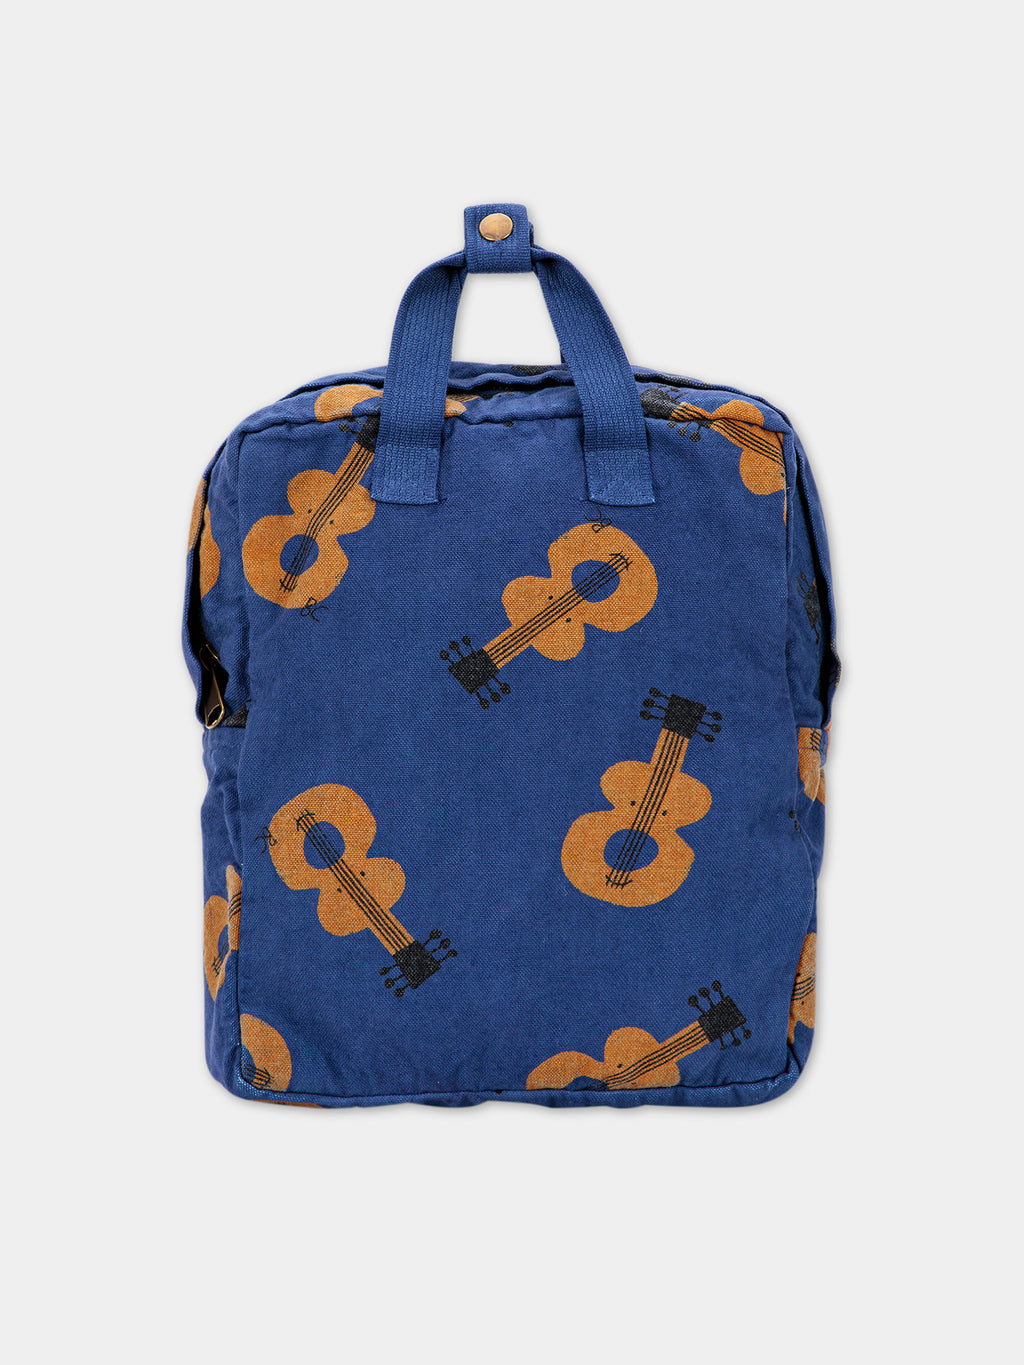 Blue backpack with violins for kids